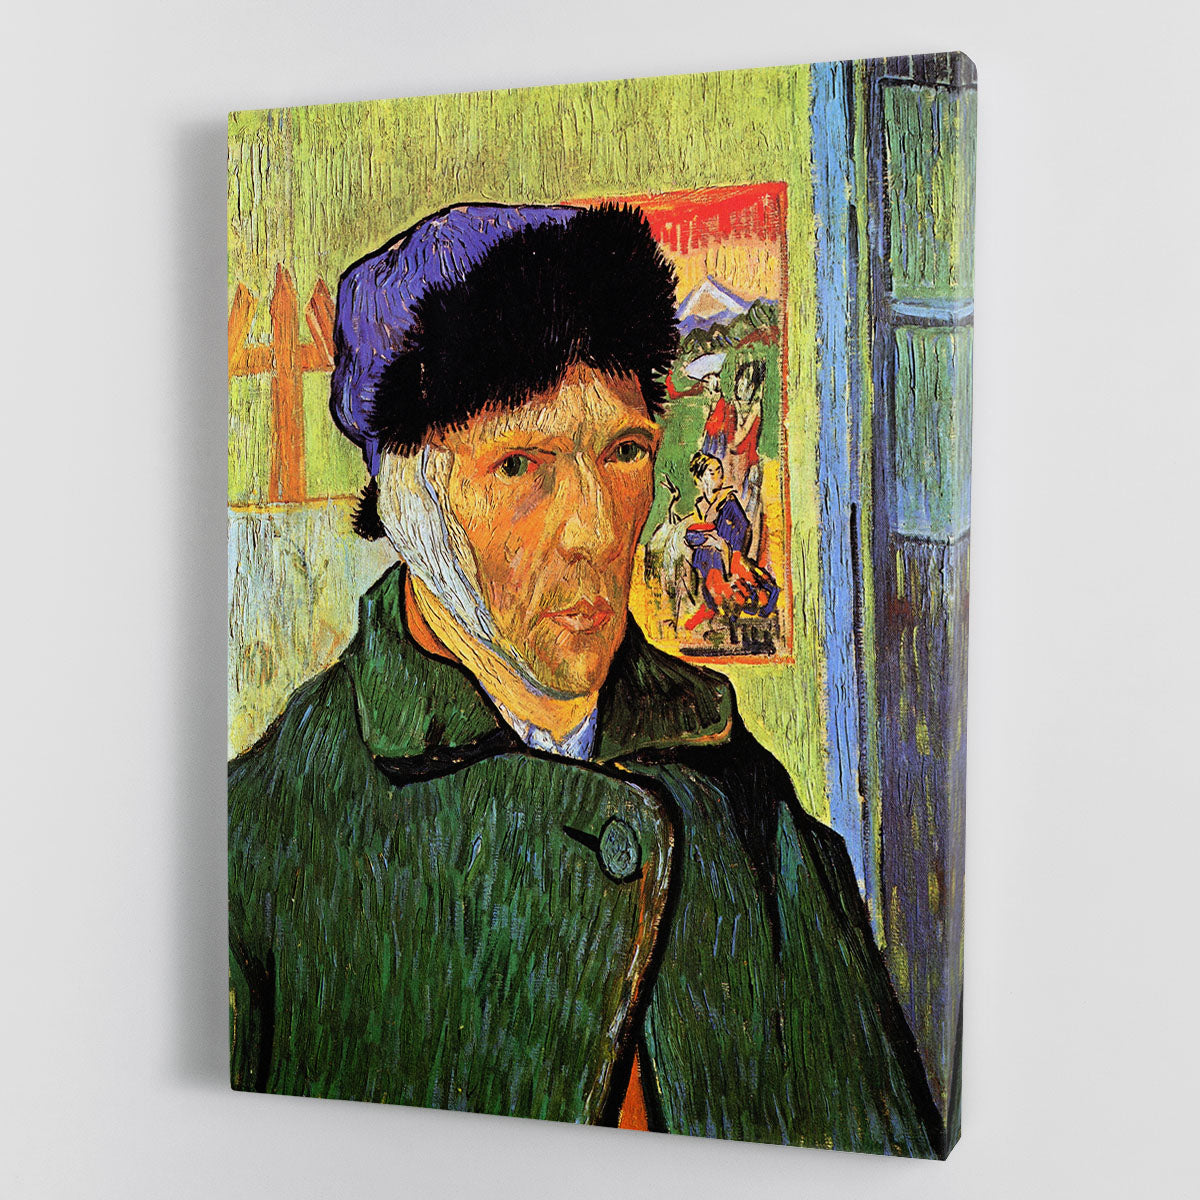 Self-Portrait 11 by Van Gogh Canvas Print or Poster - Canvas Art Rocks - 1